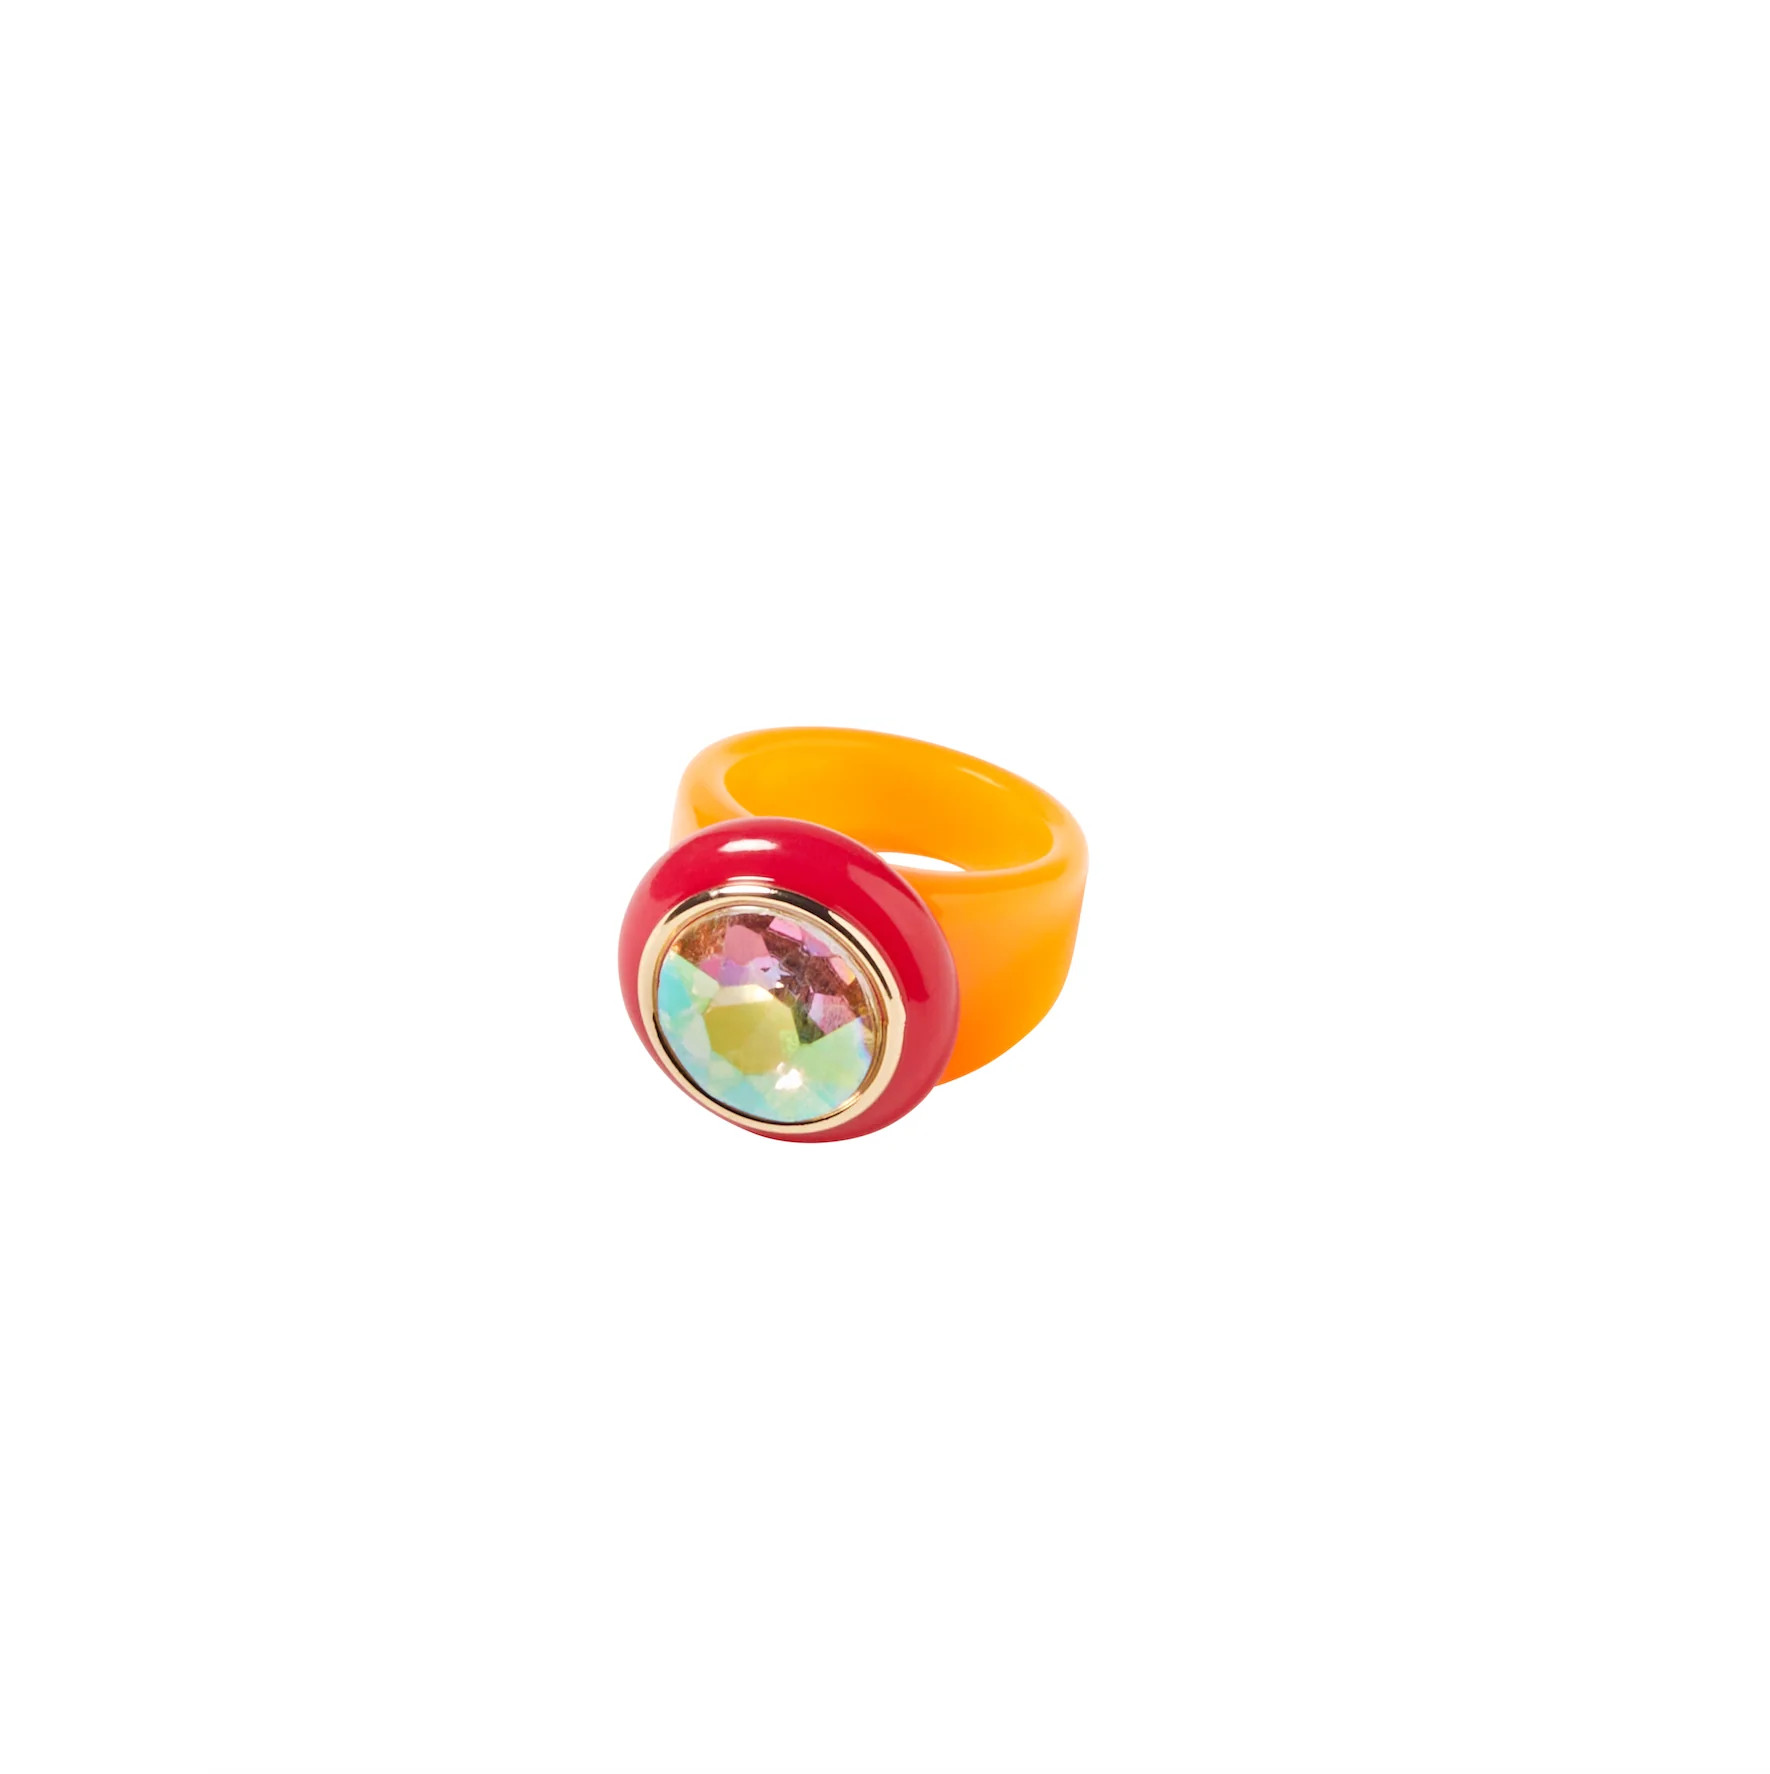 City Girl Ring - Sunset Orange | Smith & Co. Jewelry